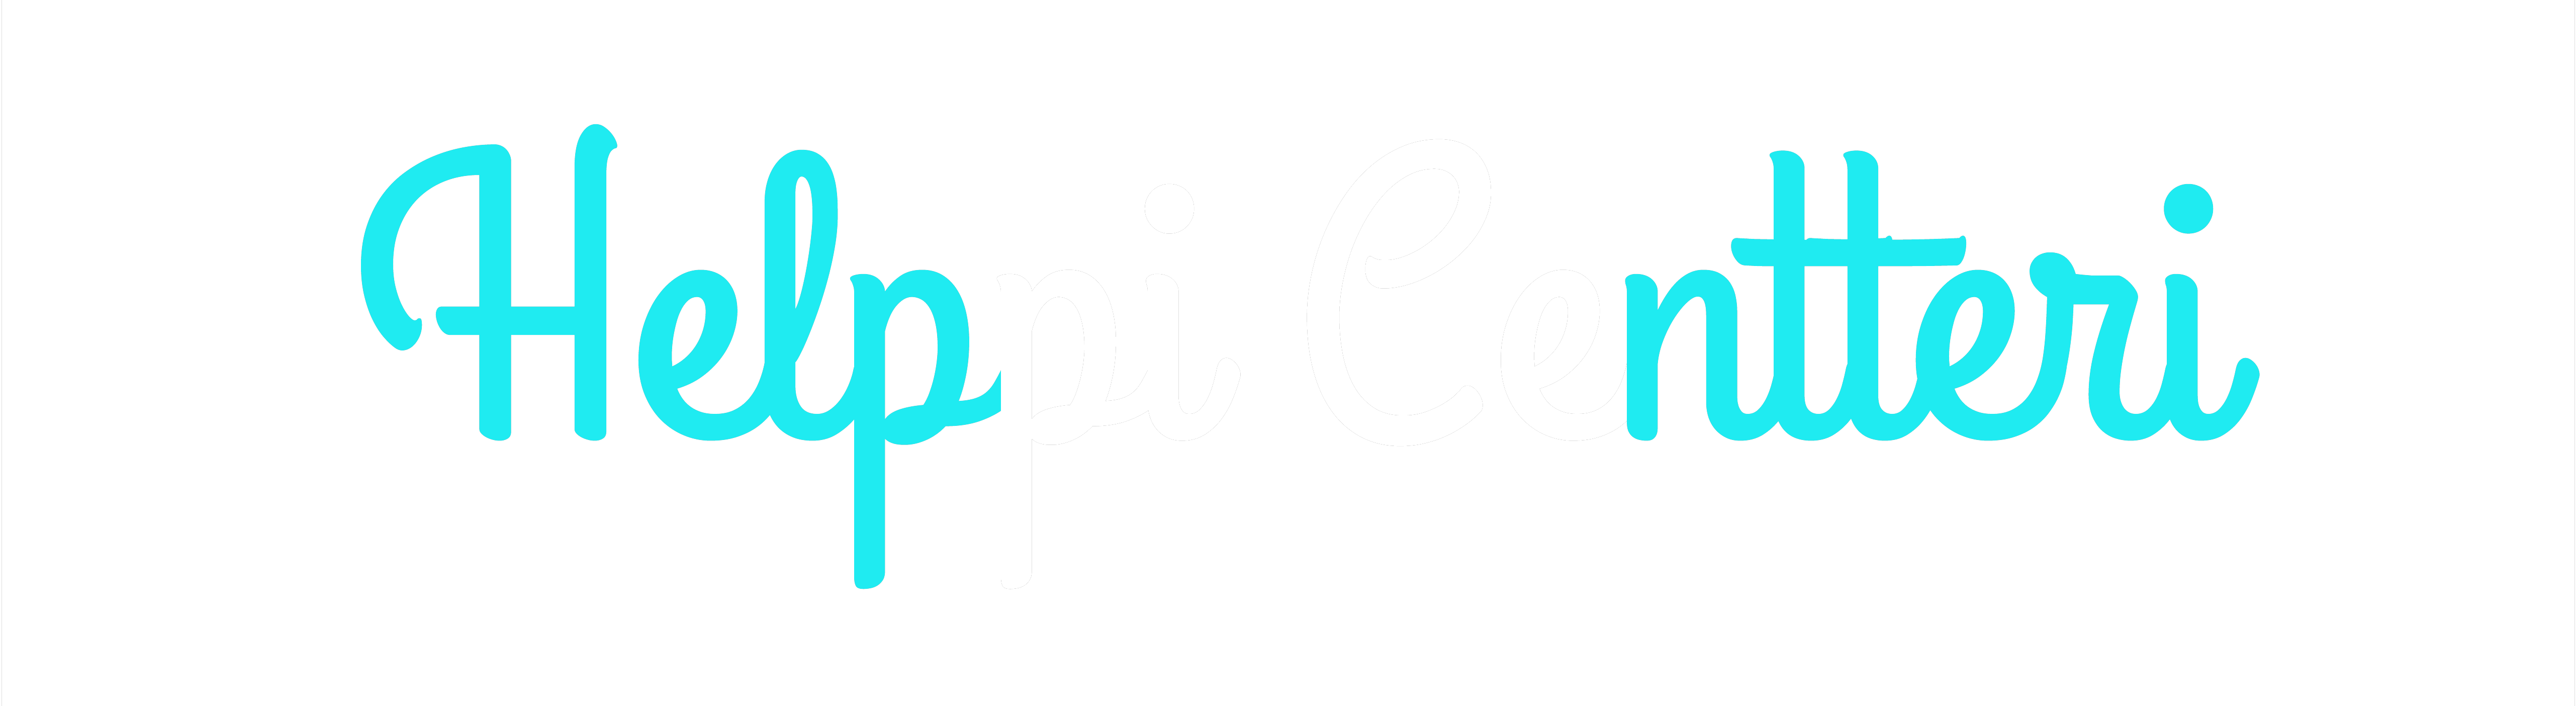 Helppi Centteri Oy Logo